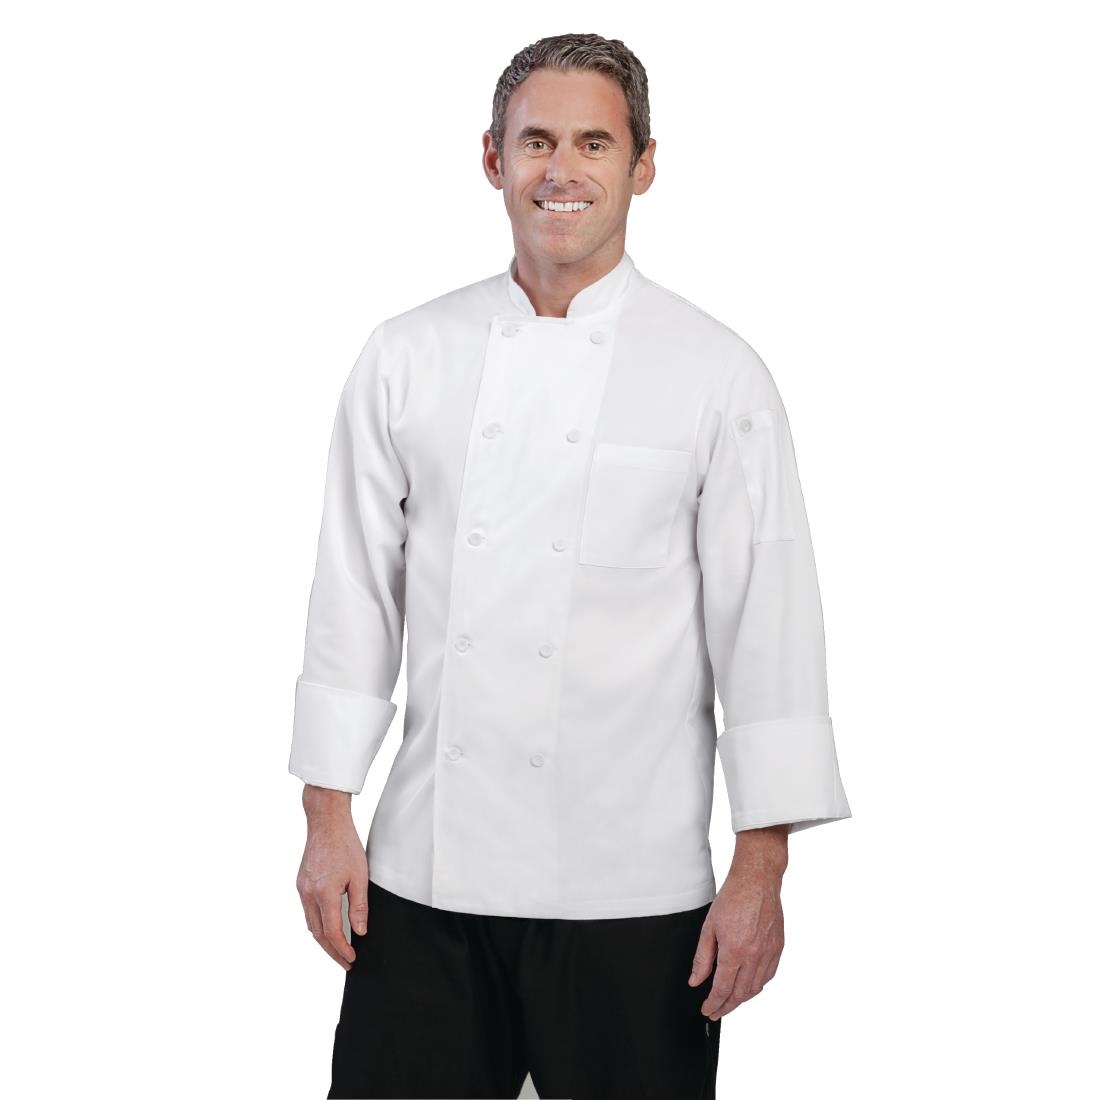 Why Do Chefs Wear White Uniforms? - Superior Linen Service